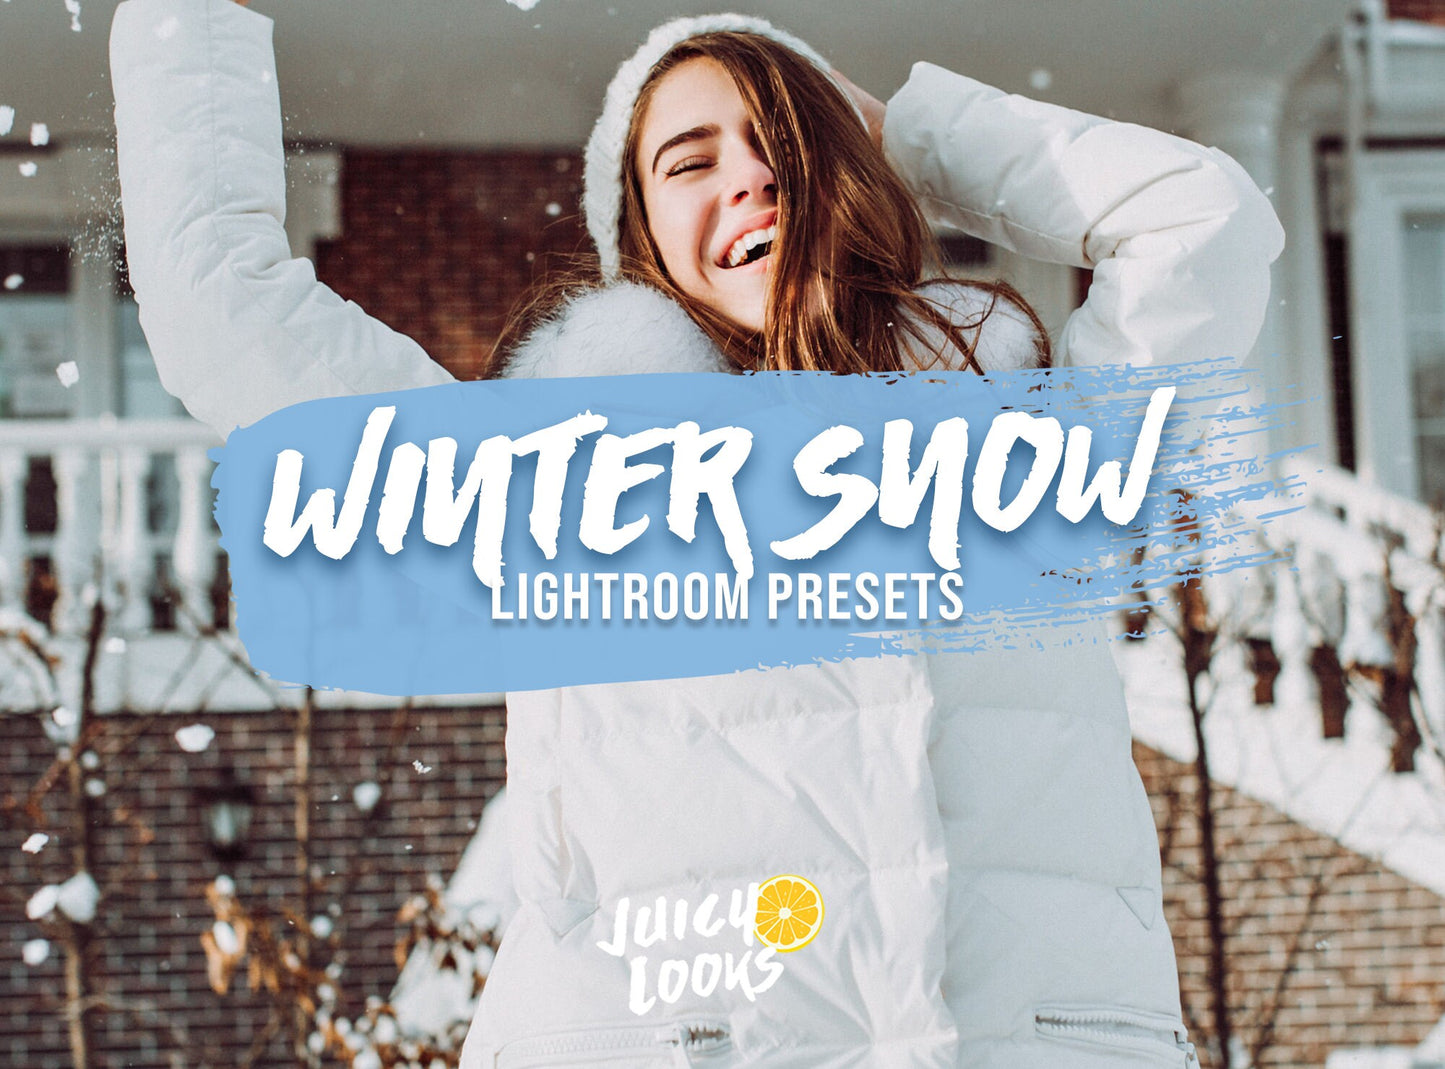 Winter Snow Lightroom Presets for Mobile & Desktop - Juicy Looks Presets